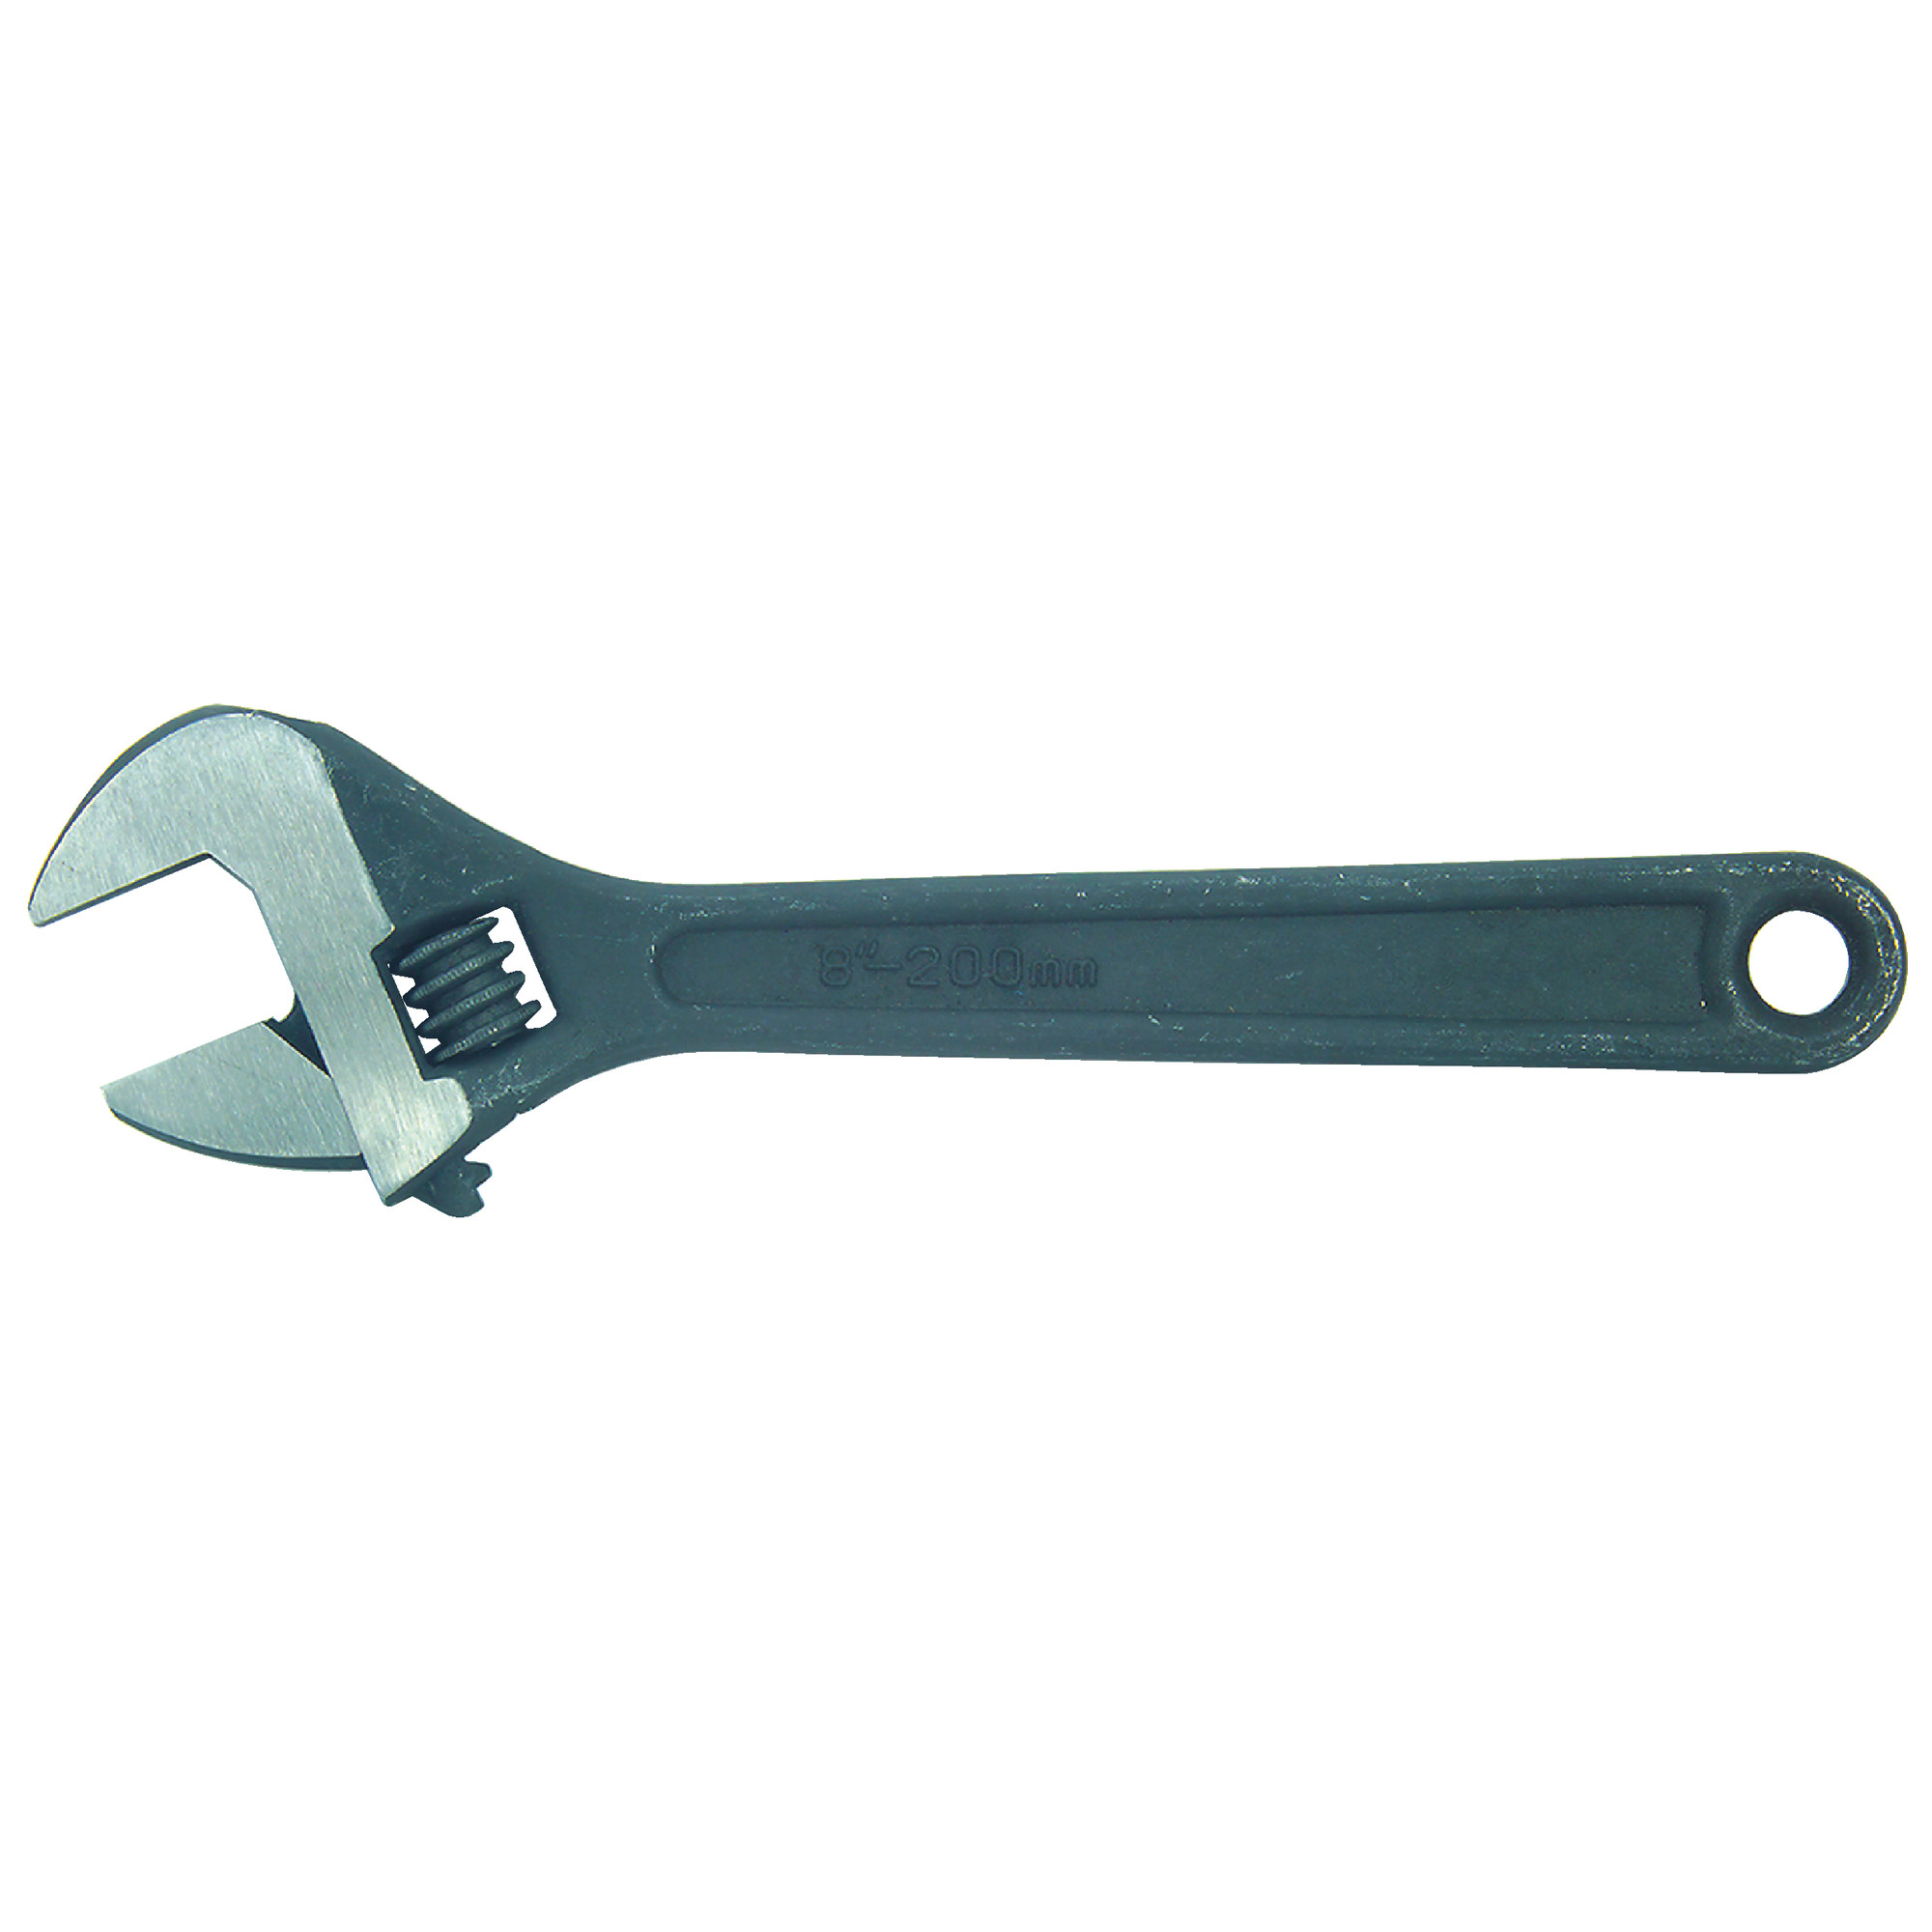 Adjustable Wrench - Model: TTC21812   SIZE: 18"